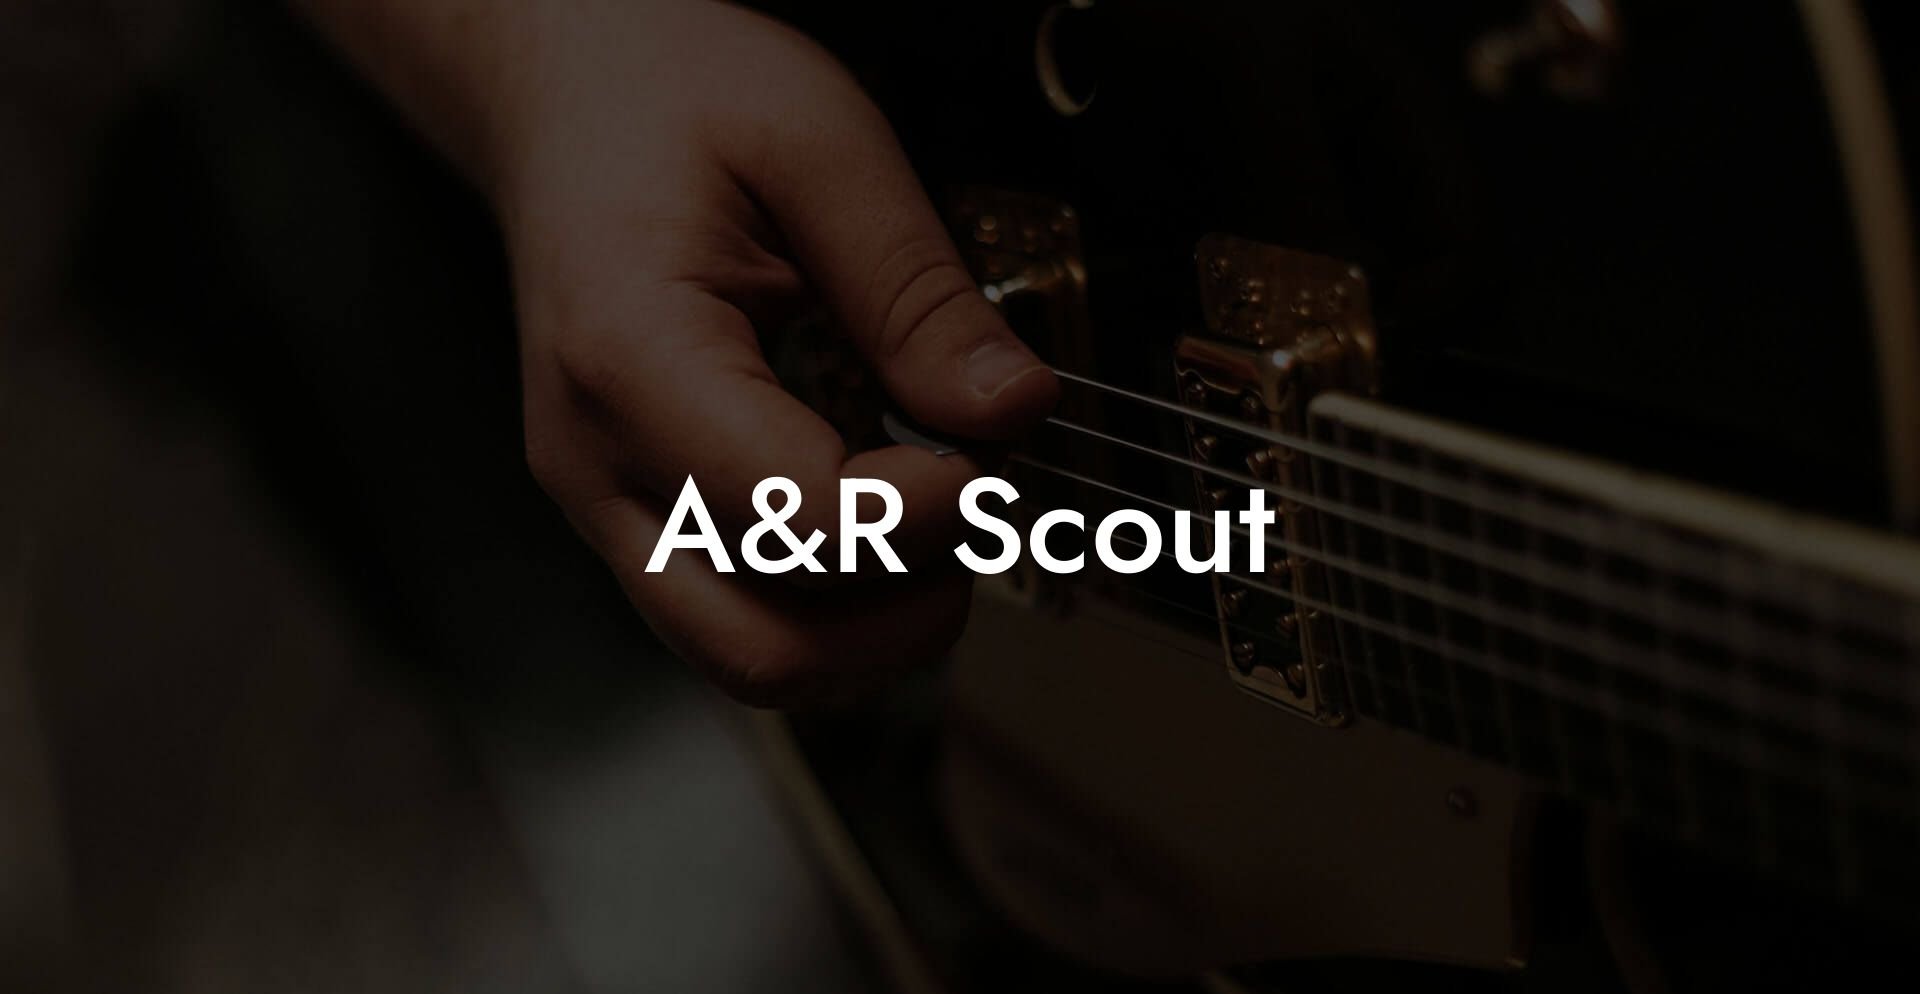 A&R Scout